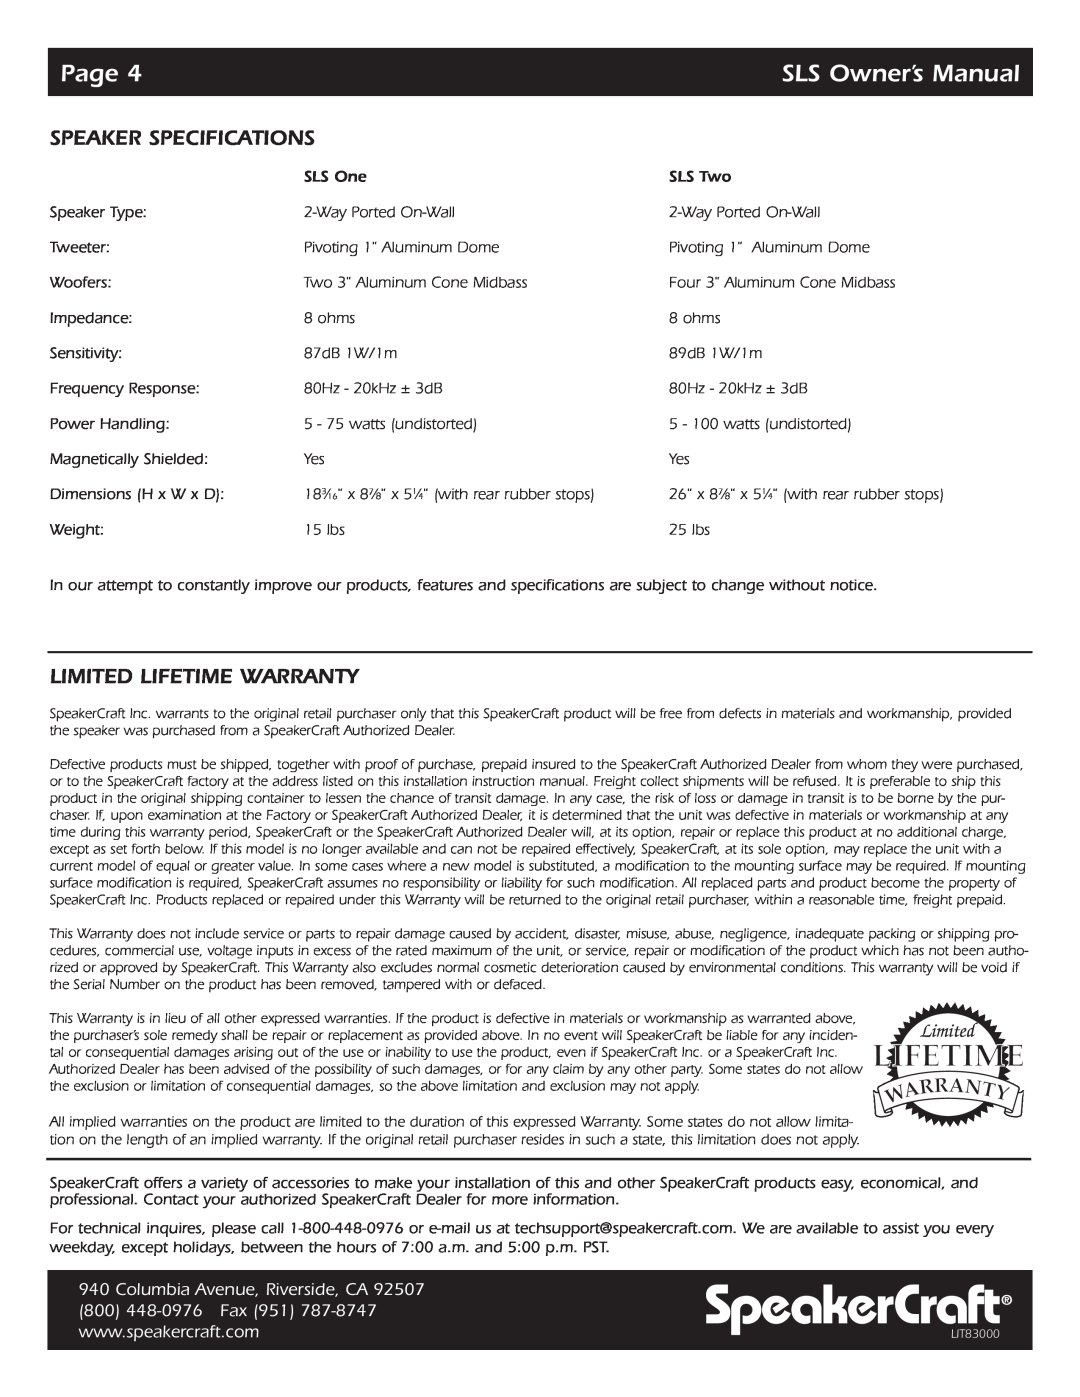 SpeakerCraft SLS Speaker Specifications, Limited Lifetime Warranty, SpeakerCraft, Page, Columbia Avenue, Riverside, CA 